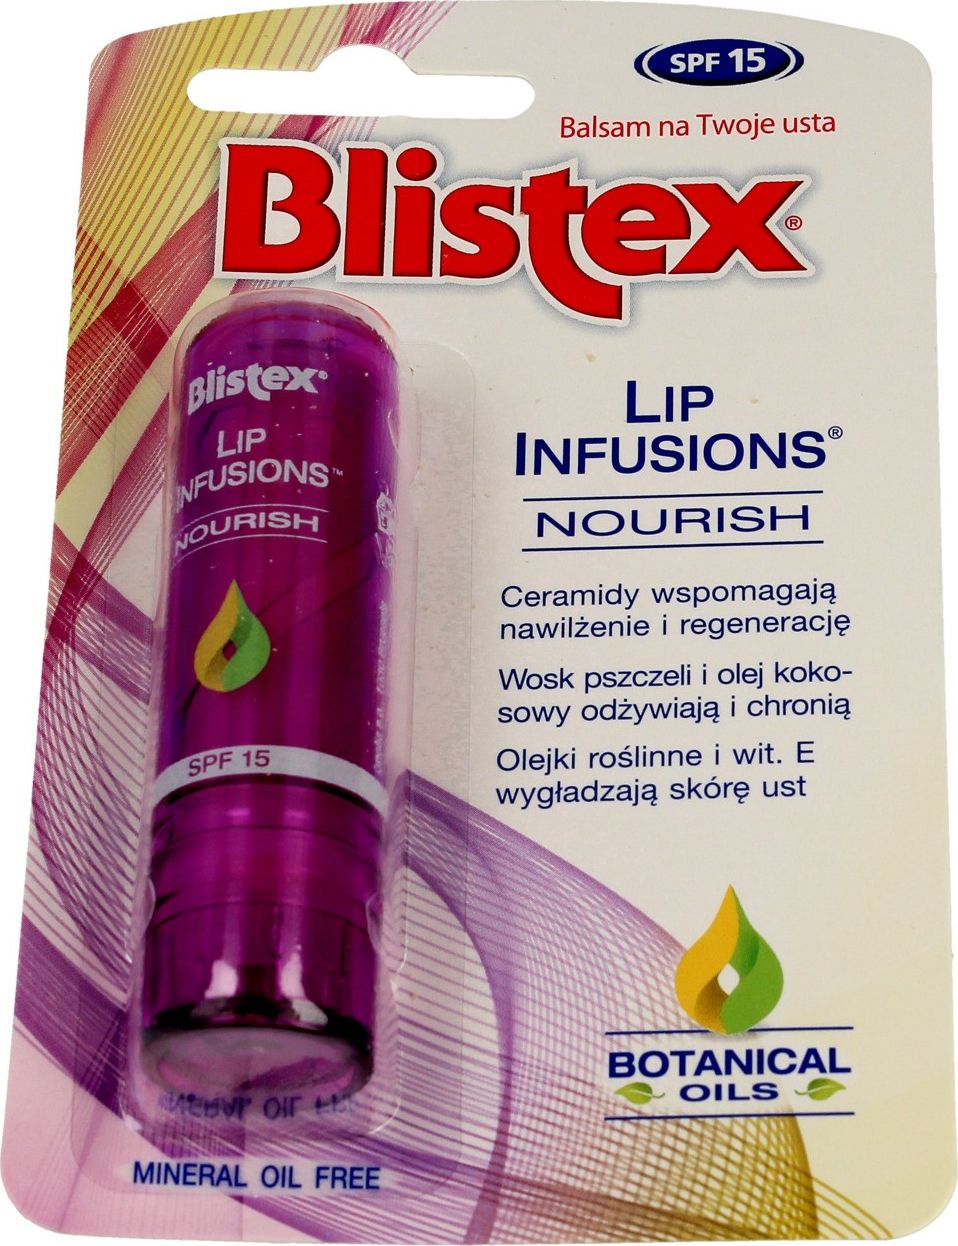 Balsam de buze Infusions, Blistex, 15 SPF, 3.7 g